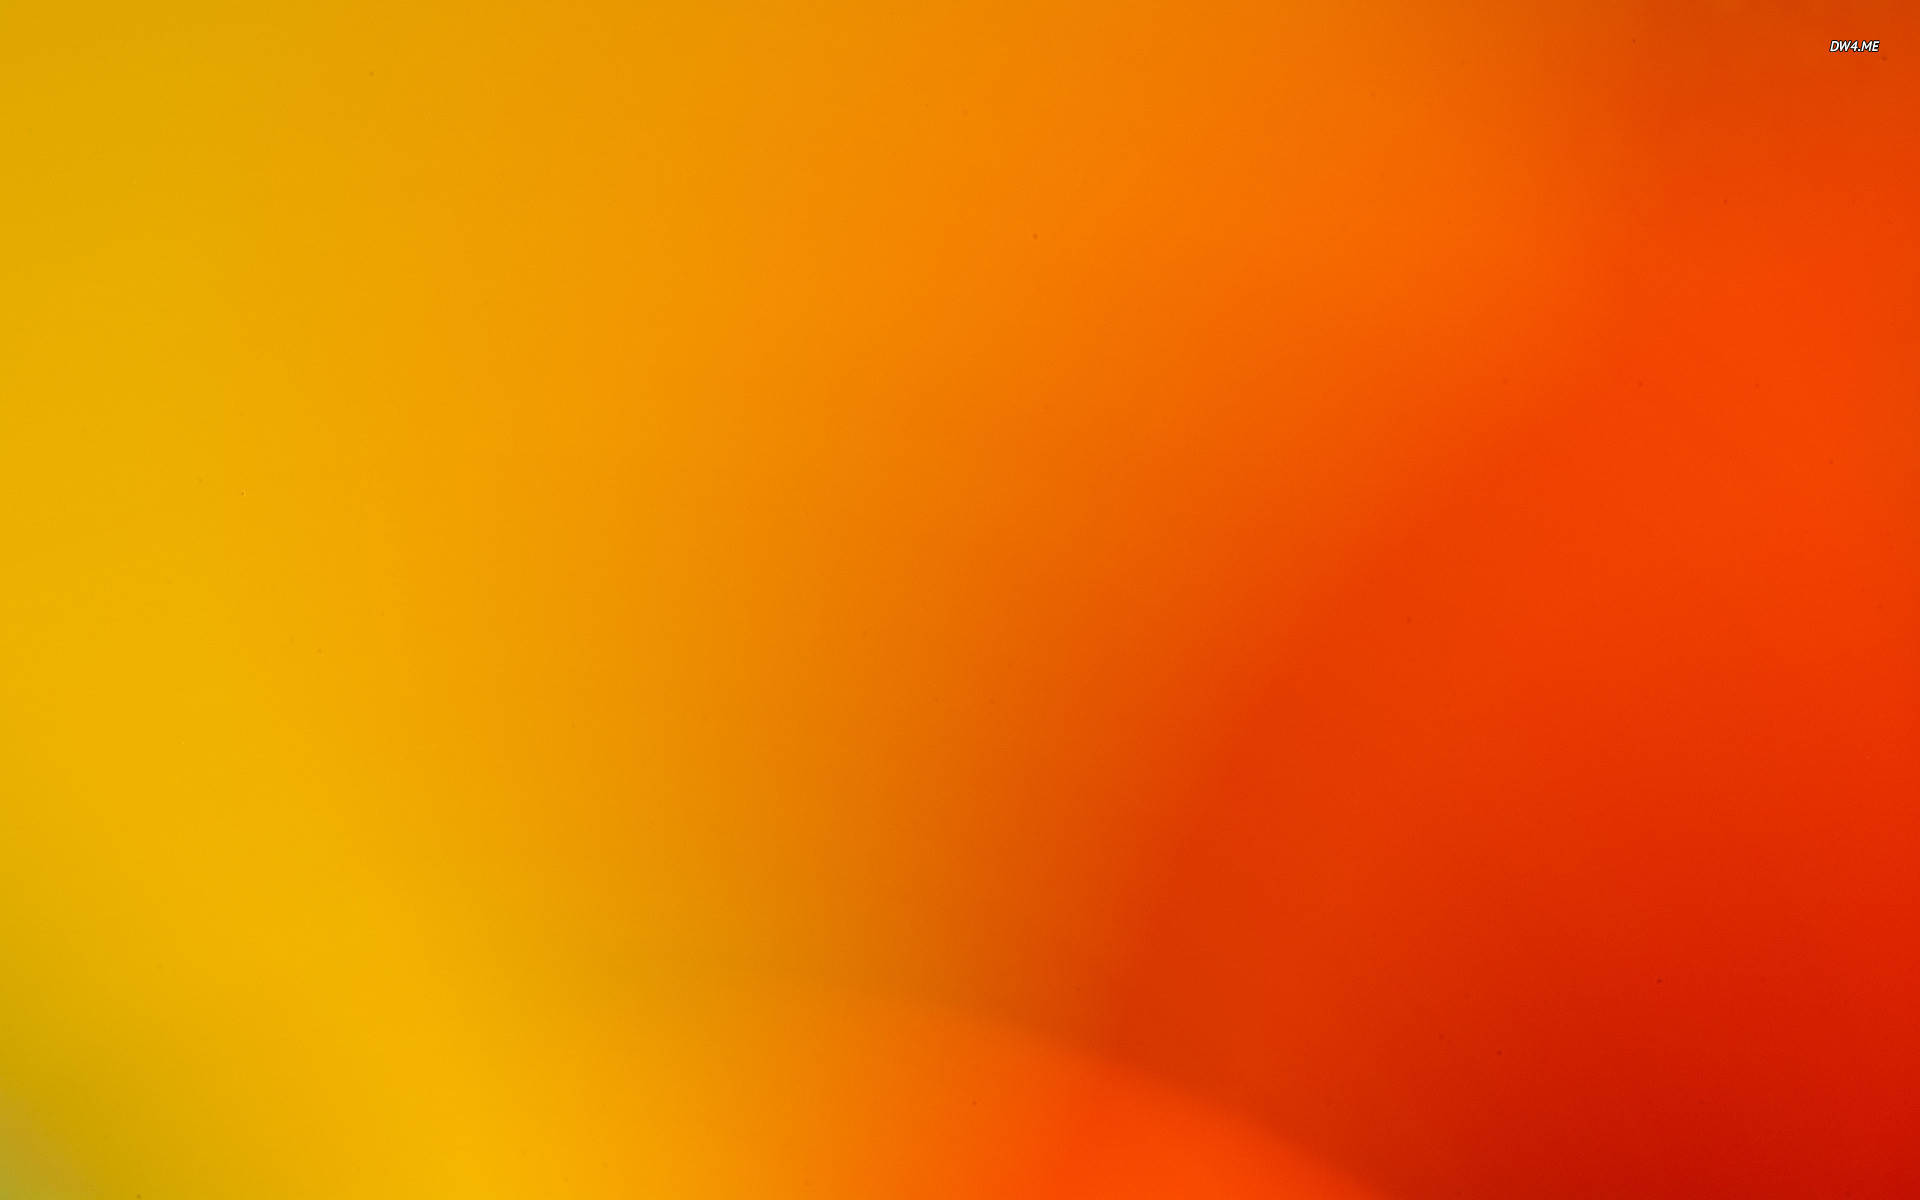 Free Orange And Yellow Wallpaper Downloads, [100+] Orange And Yellow  Wallpapers for FREE 